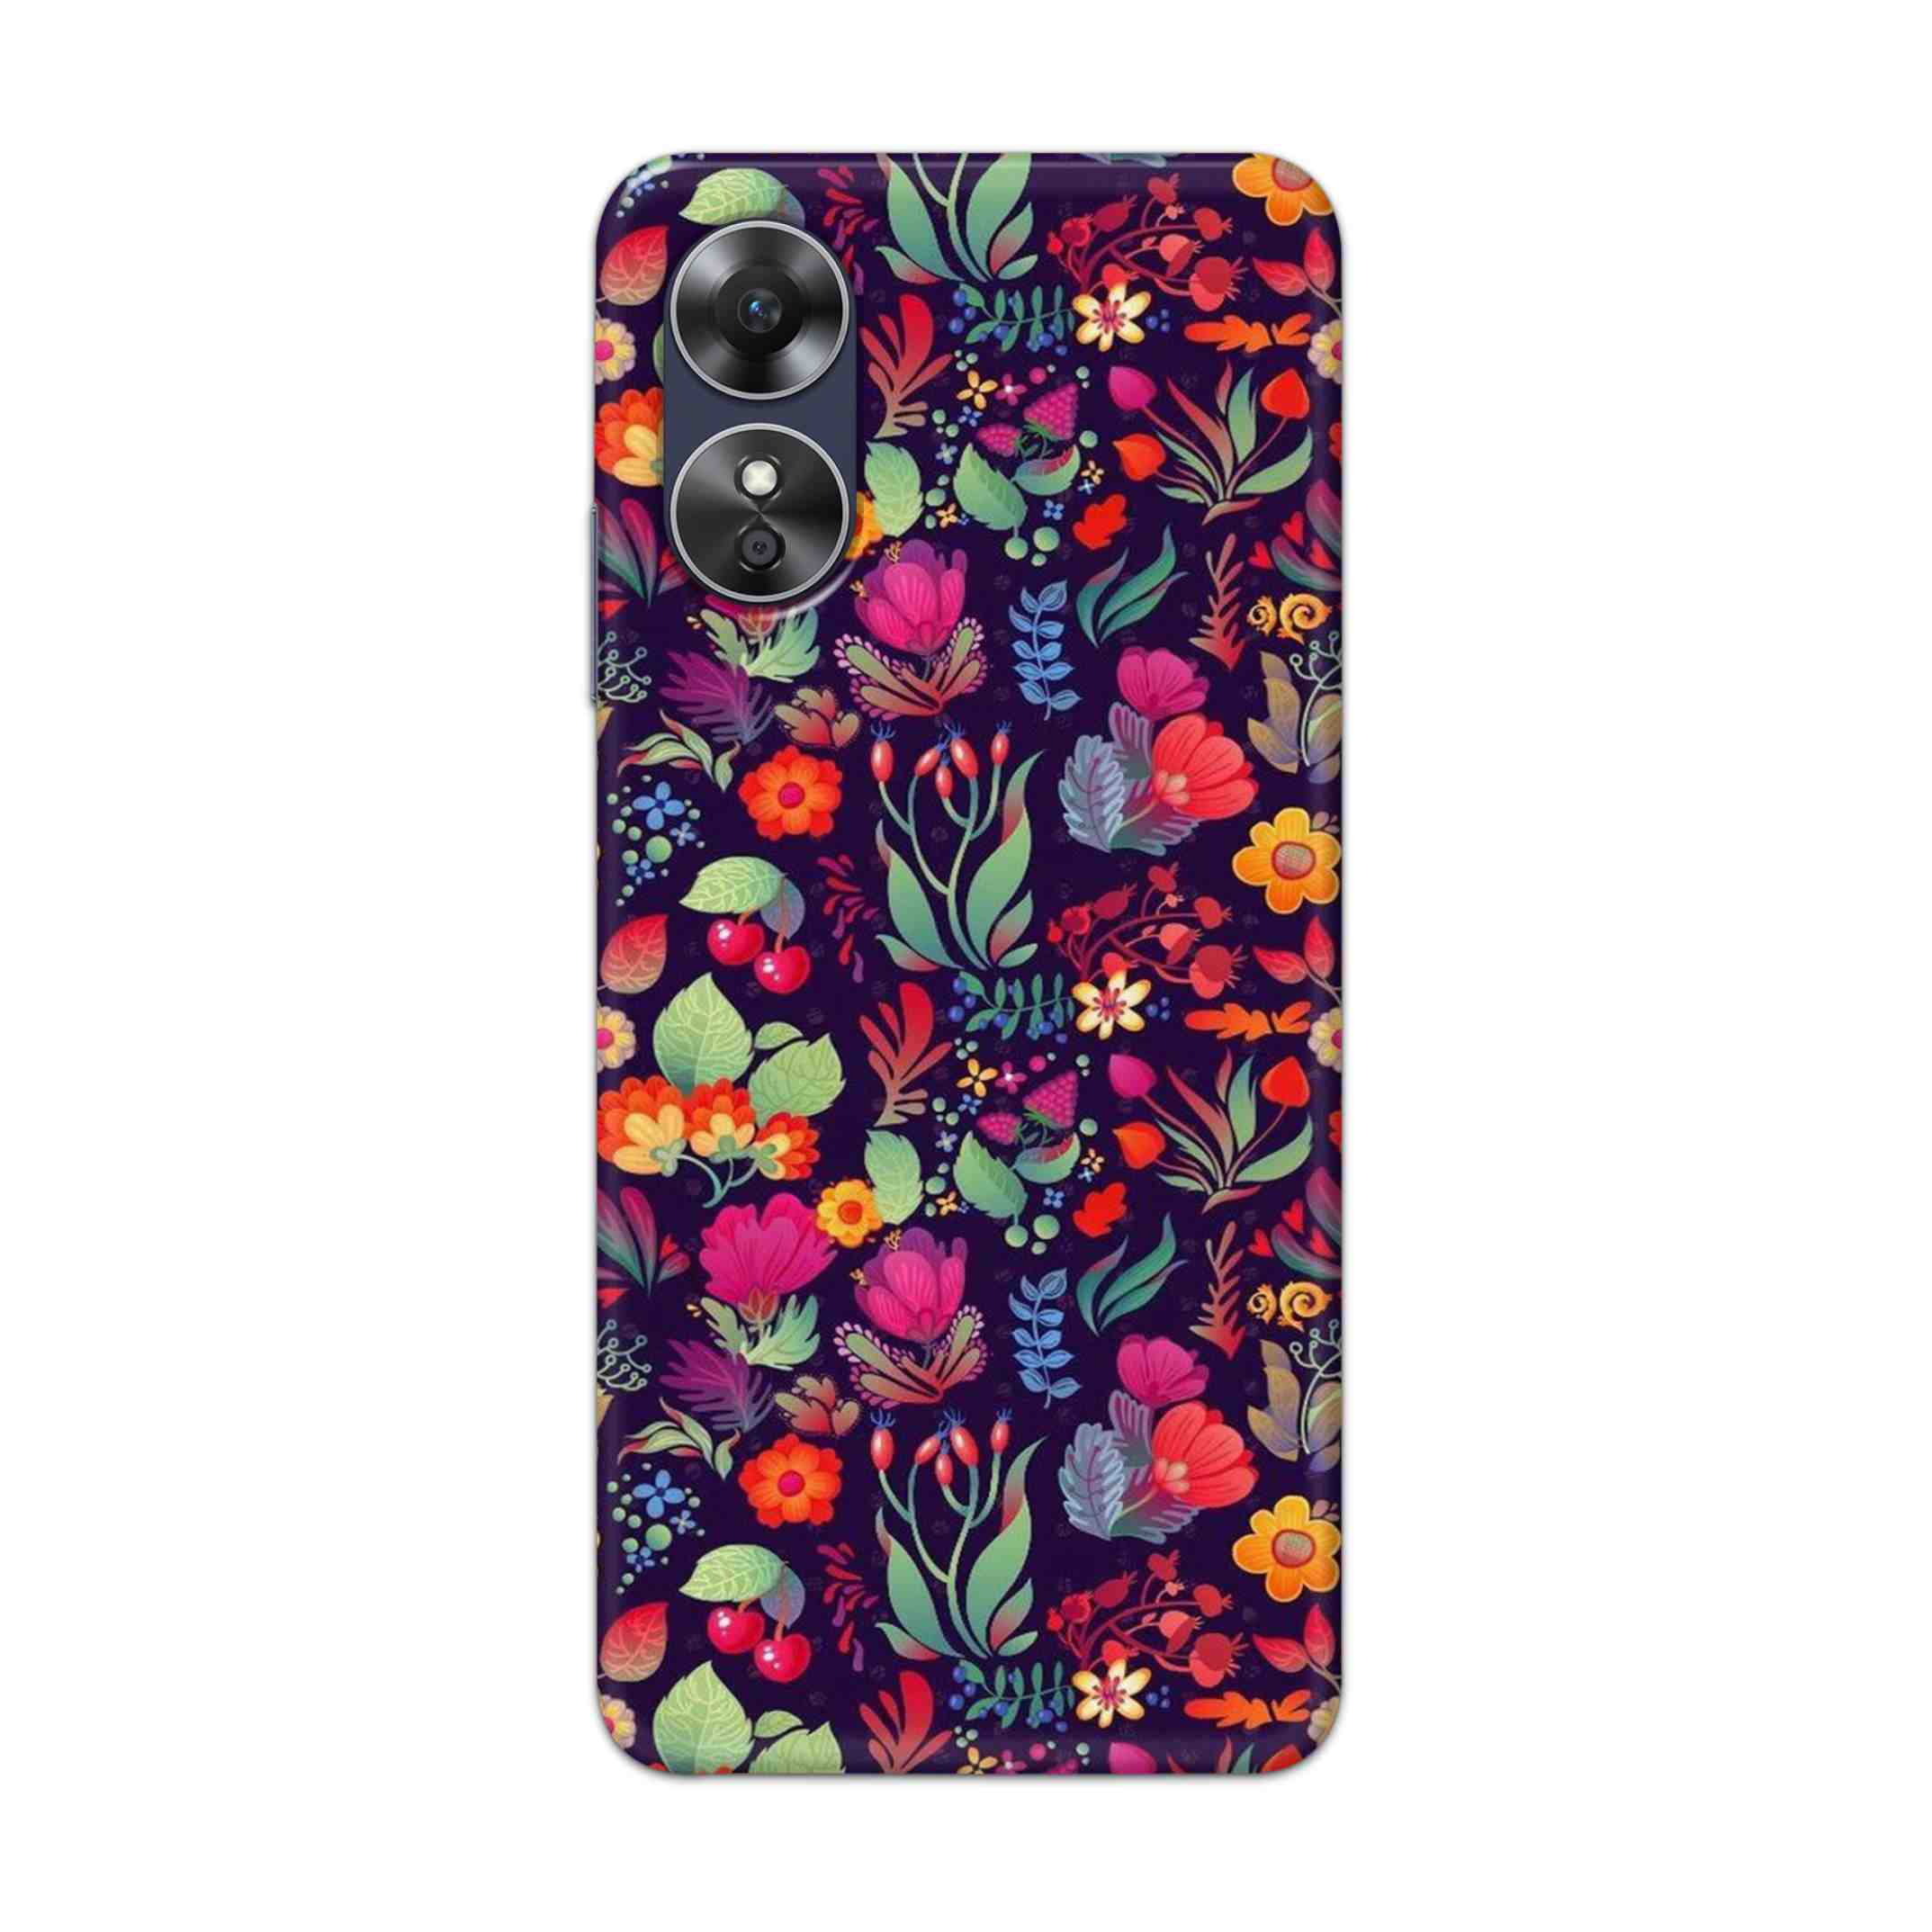 Buy Fruits Flower Hard Back Mobile Phone Case Cover For Oppo A17 Online